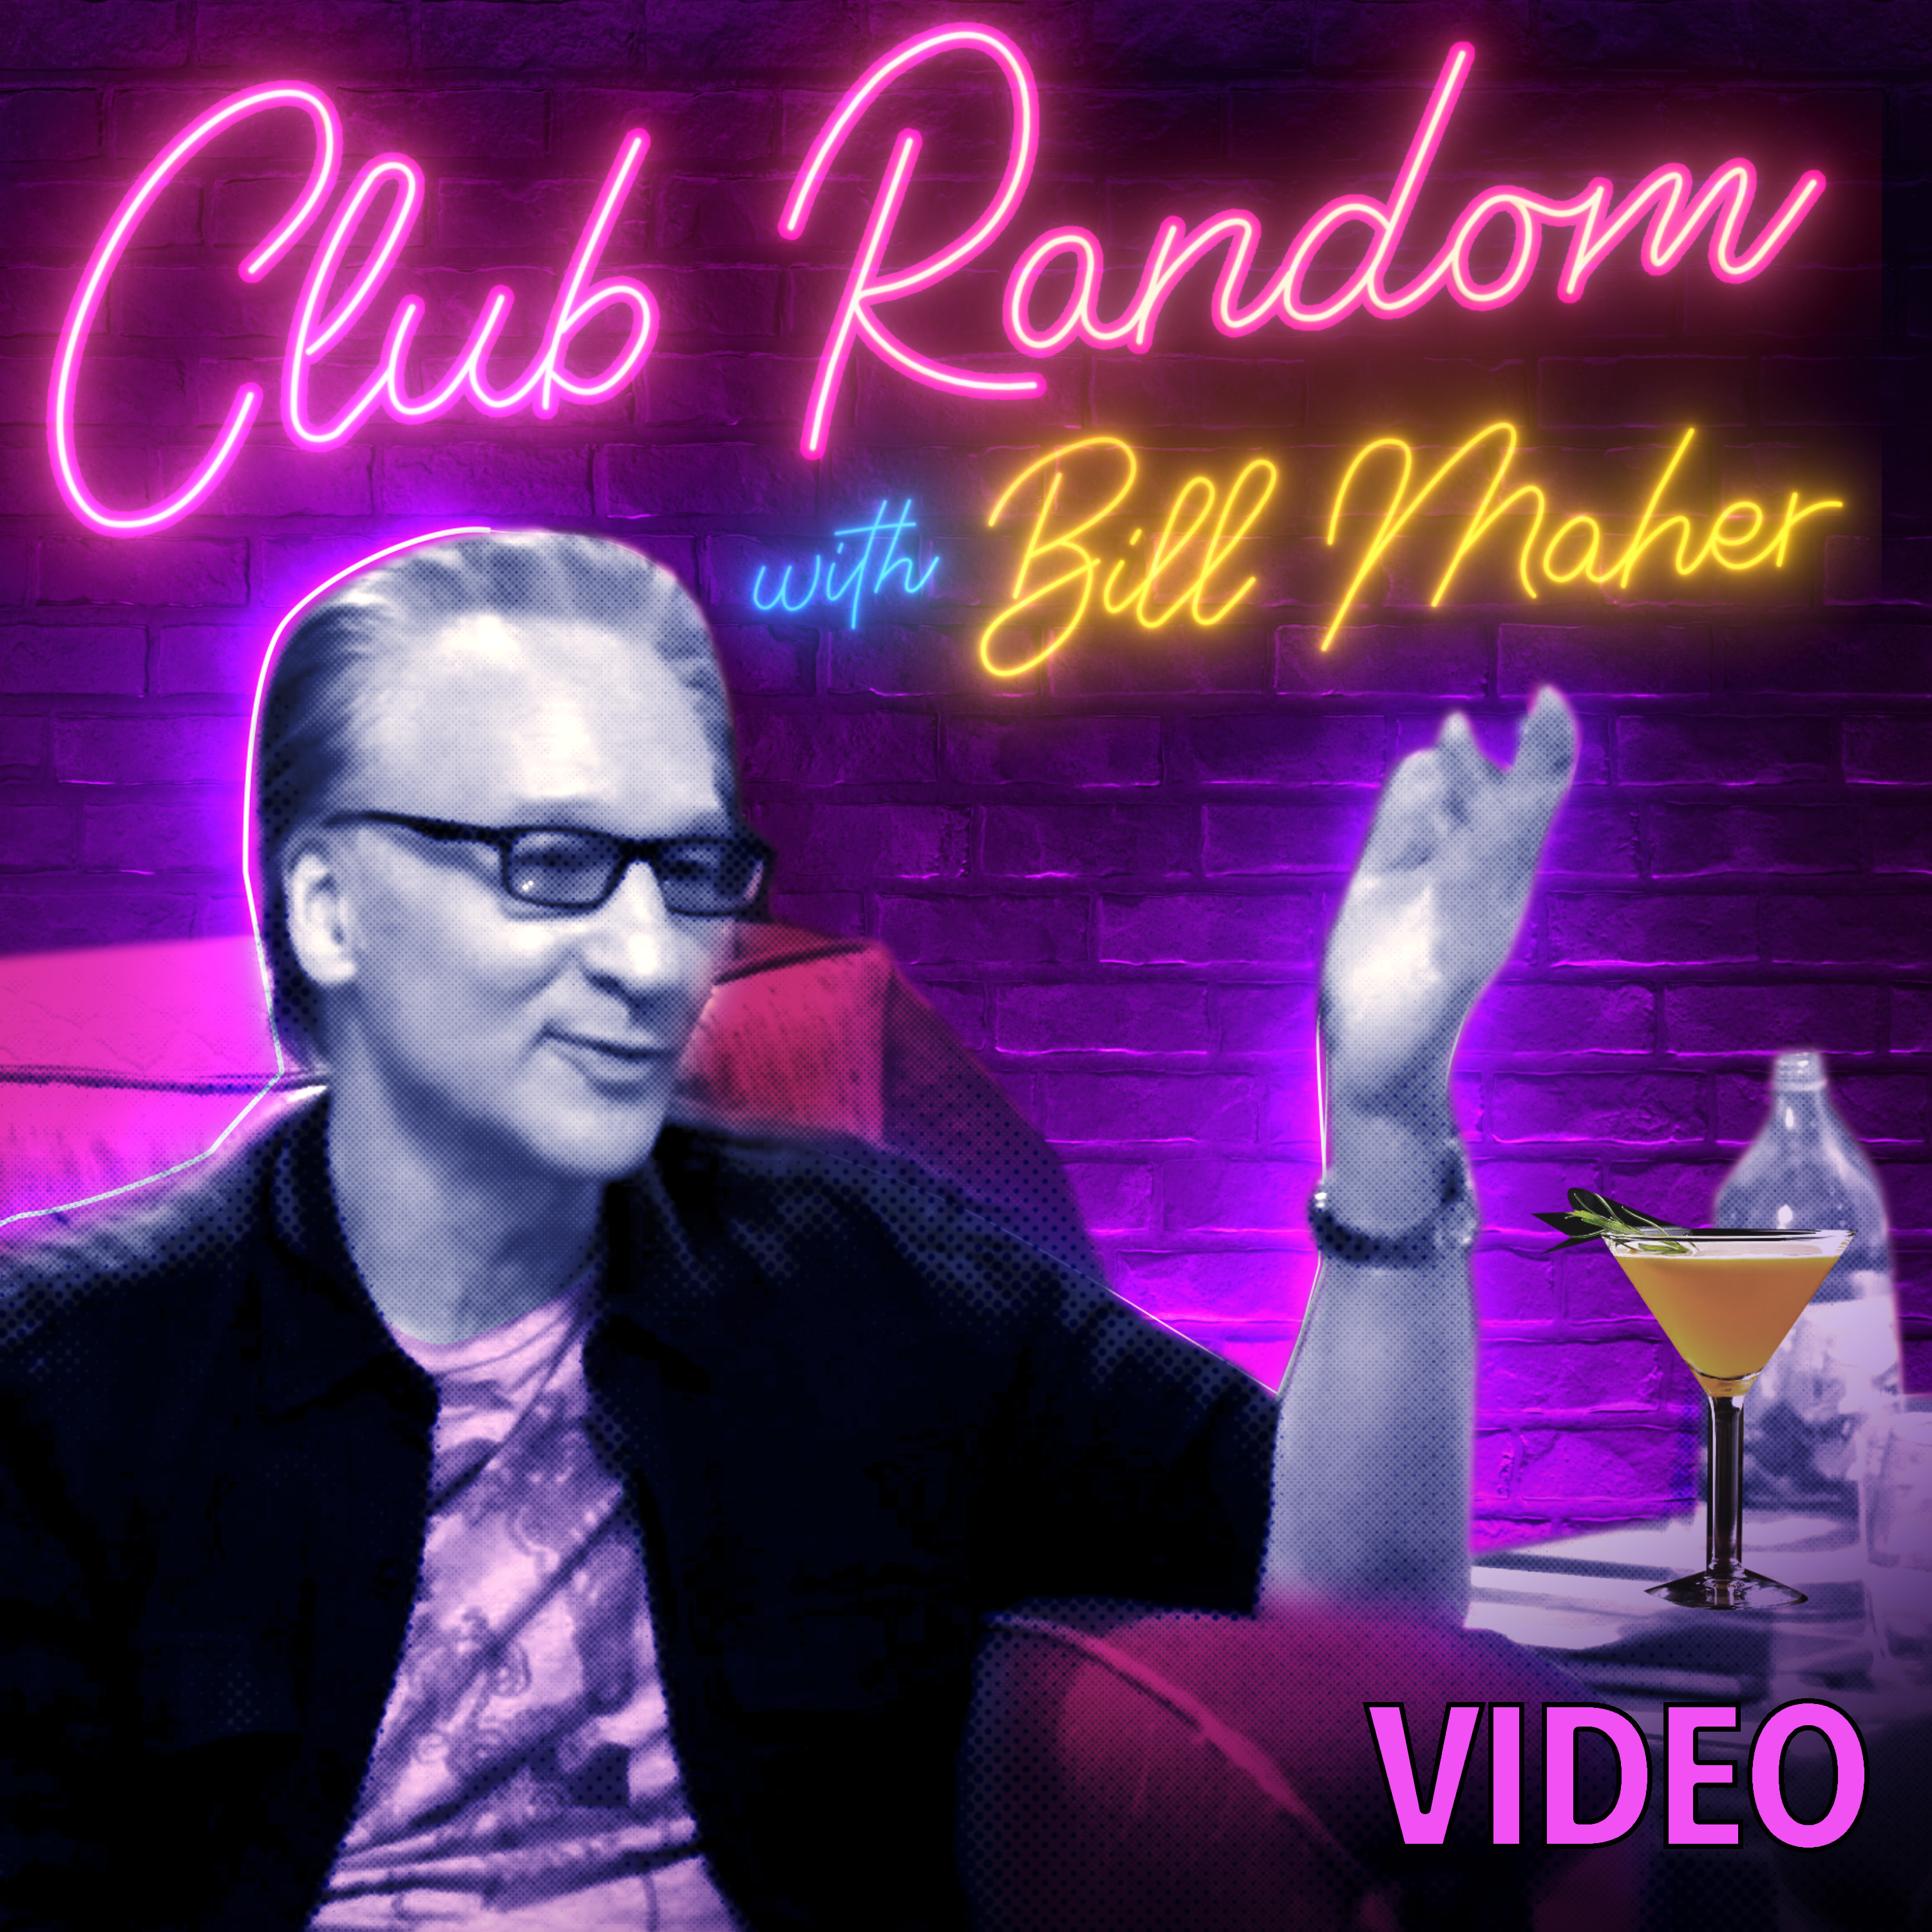 Video: Nicole Avant | Club Random with Bill Maher